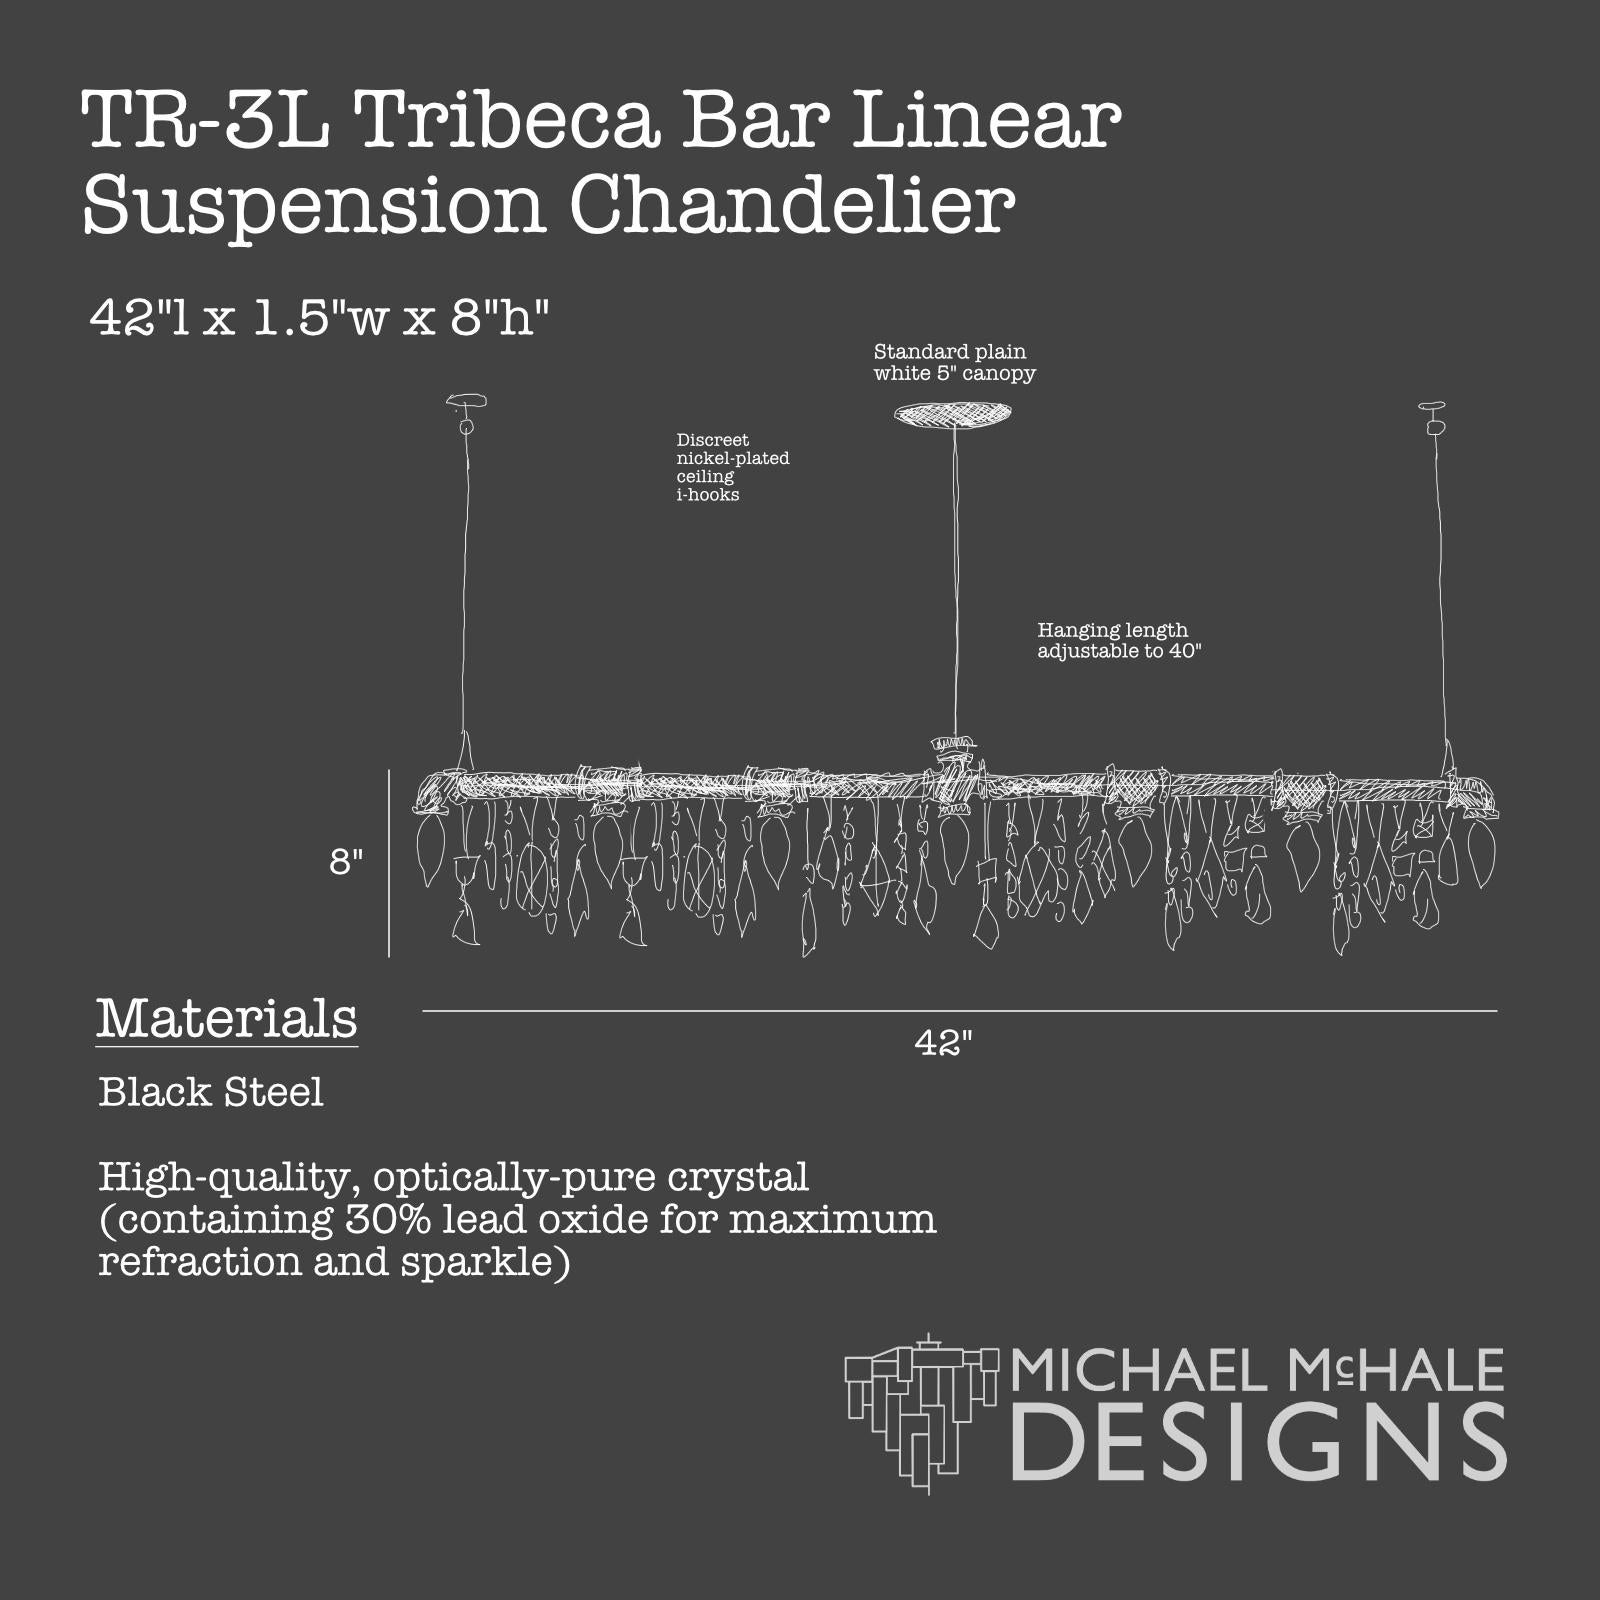 Tribeca Bar Black Steel and Crystal Industrial Chandelier Linear Suspension For Sale 4